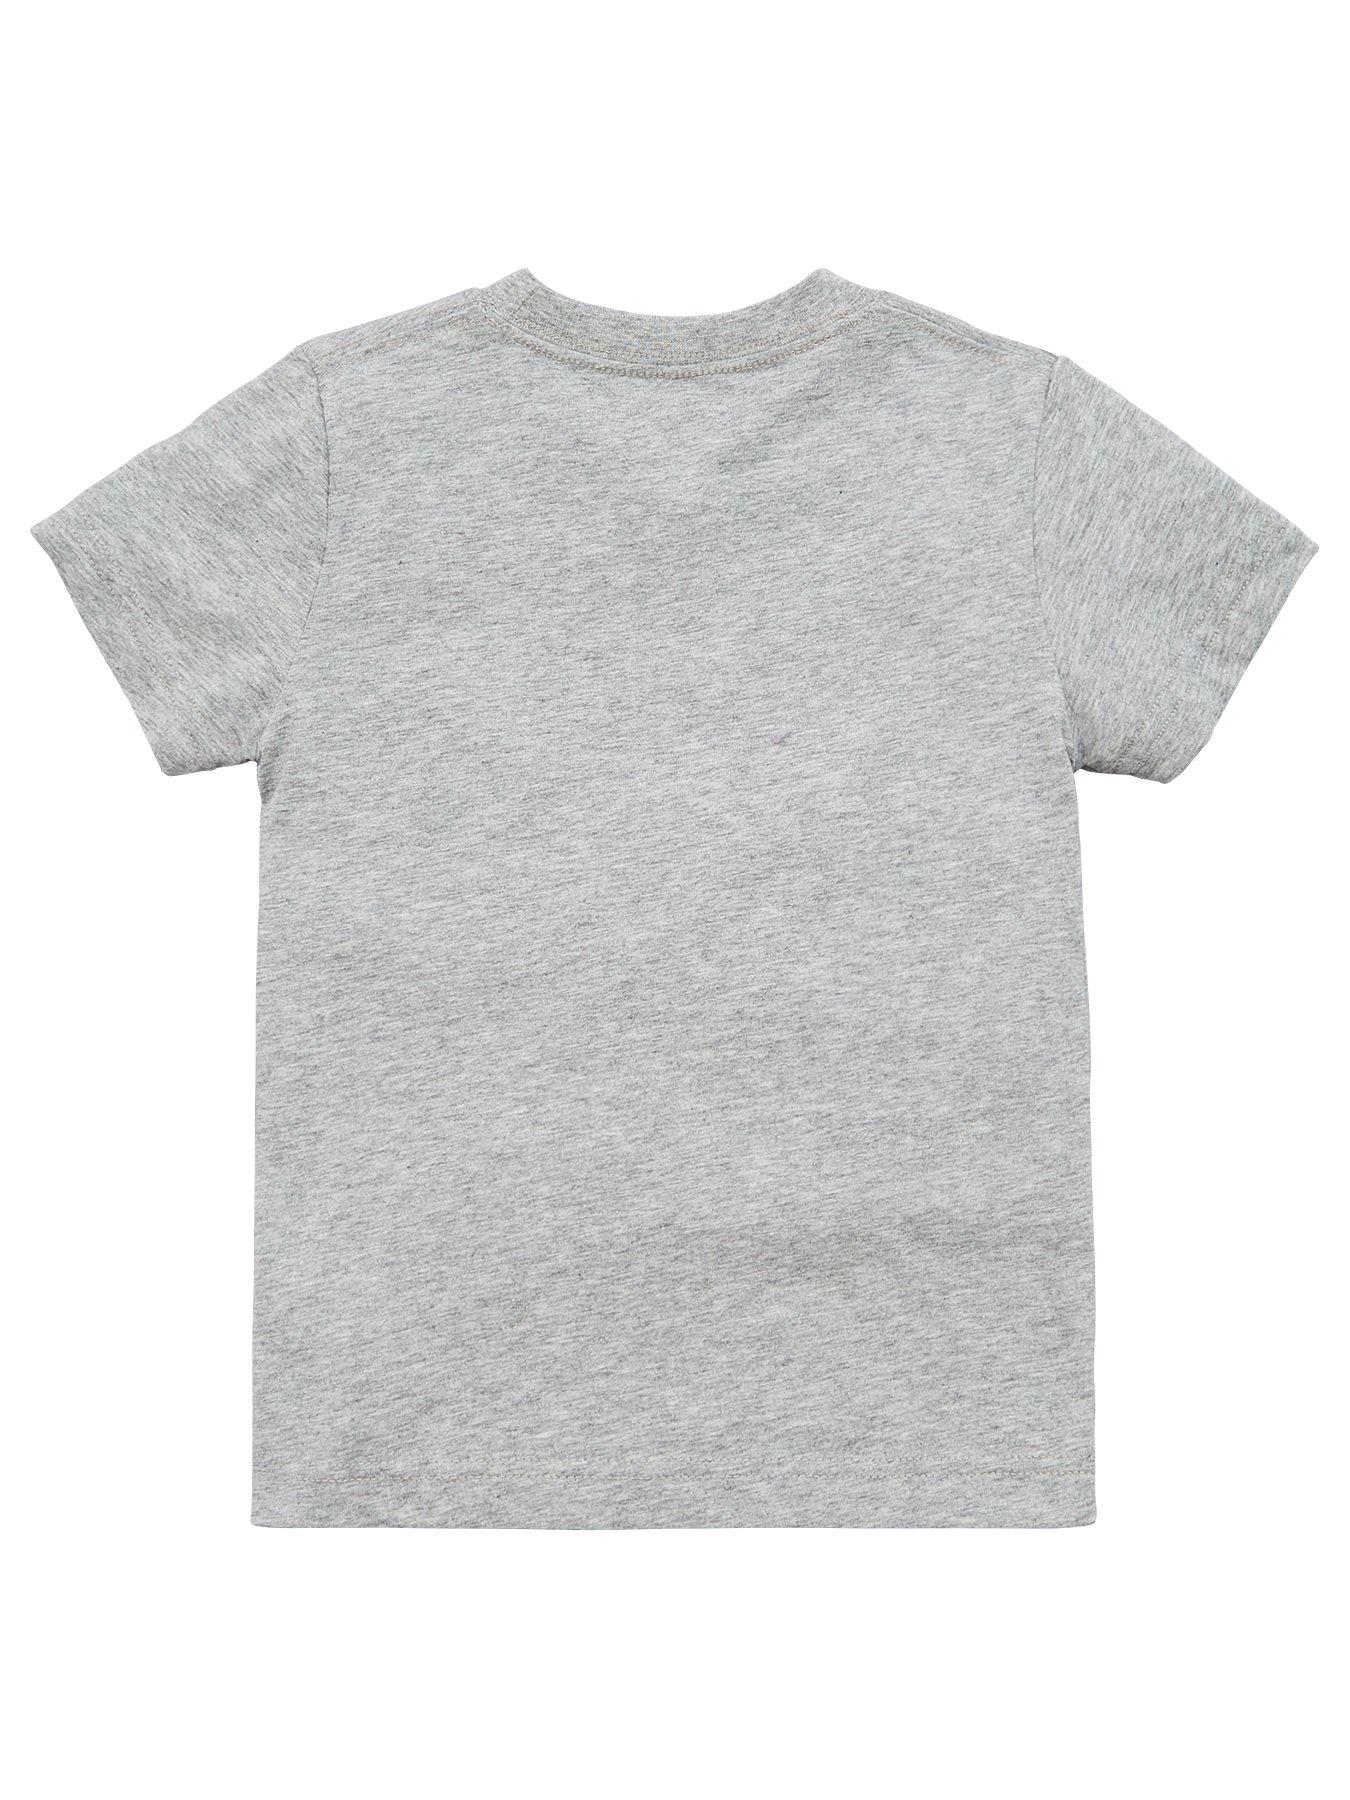 Converse Kids Boys T-Shirt Grey - Dark Chuck Patch